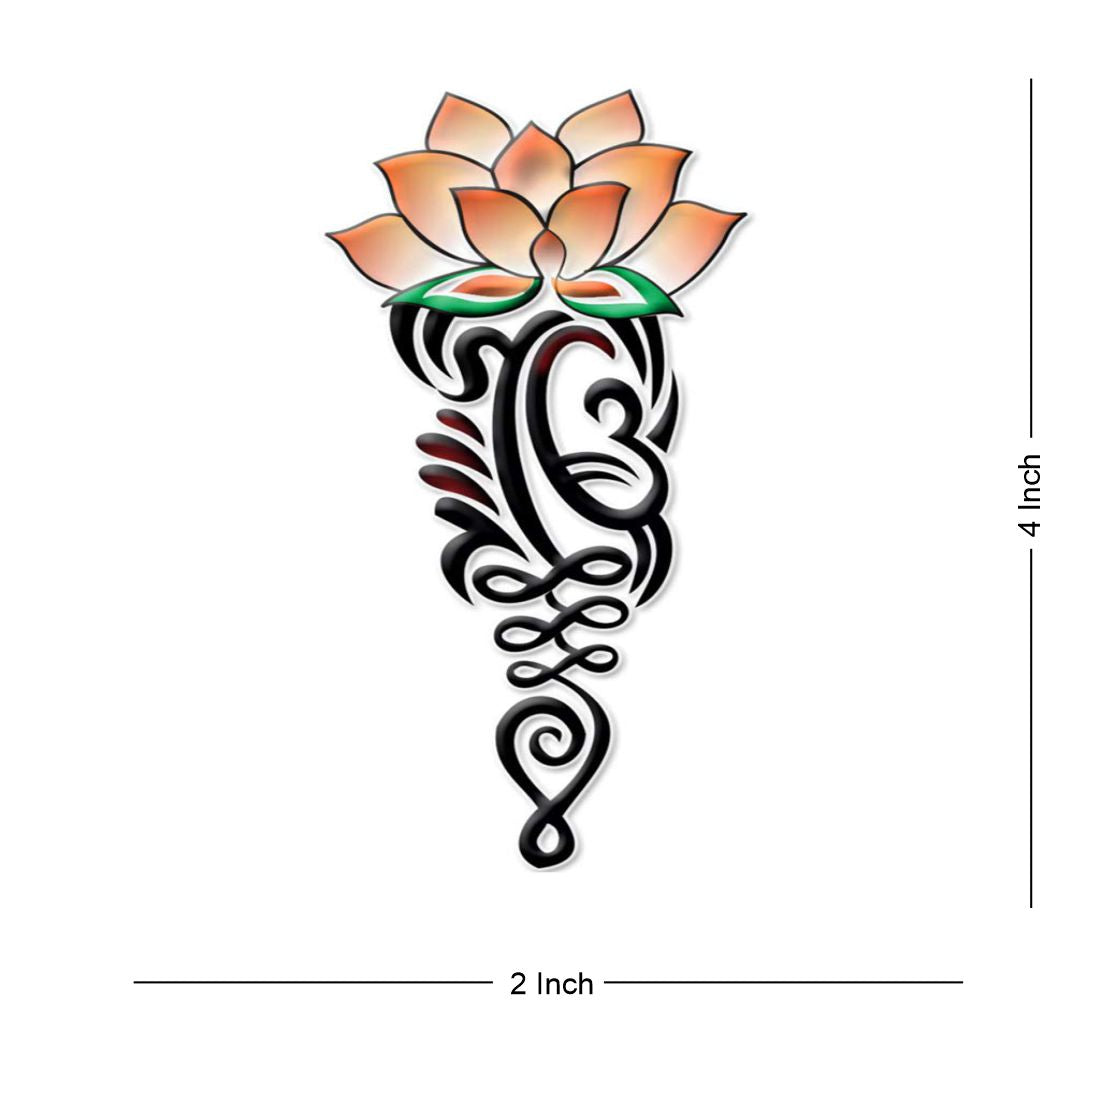 Henna Tribal Temporary Tattoo - Lotus Flower Tattoos Sticker Art Decoration  1pc | eBay